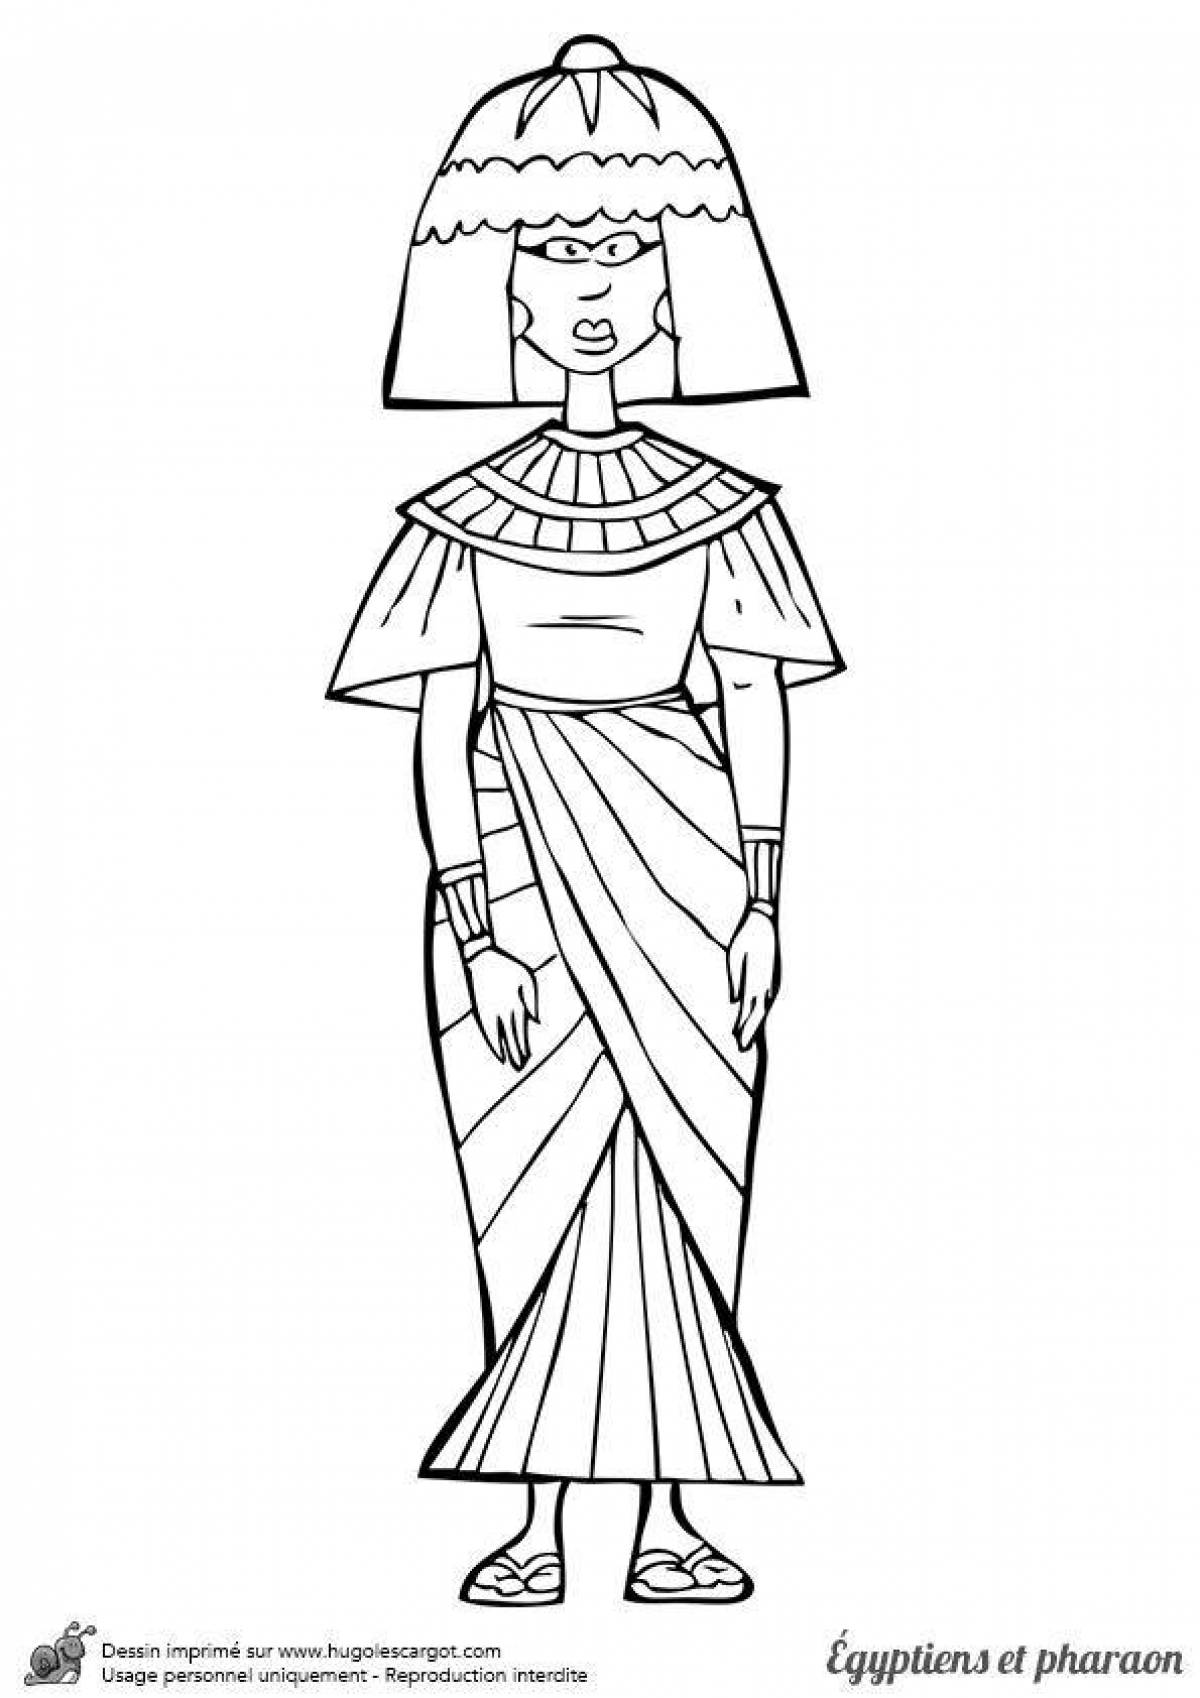 Impressive pharaoh coloring page